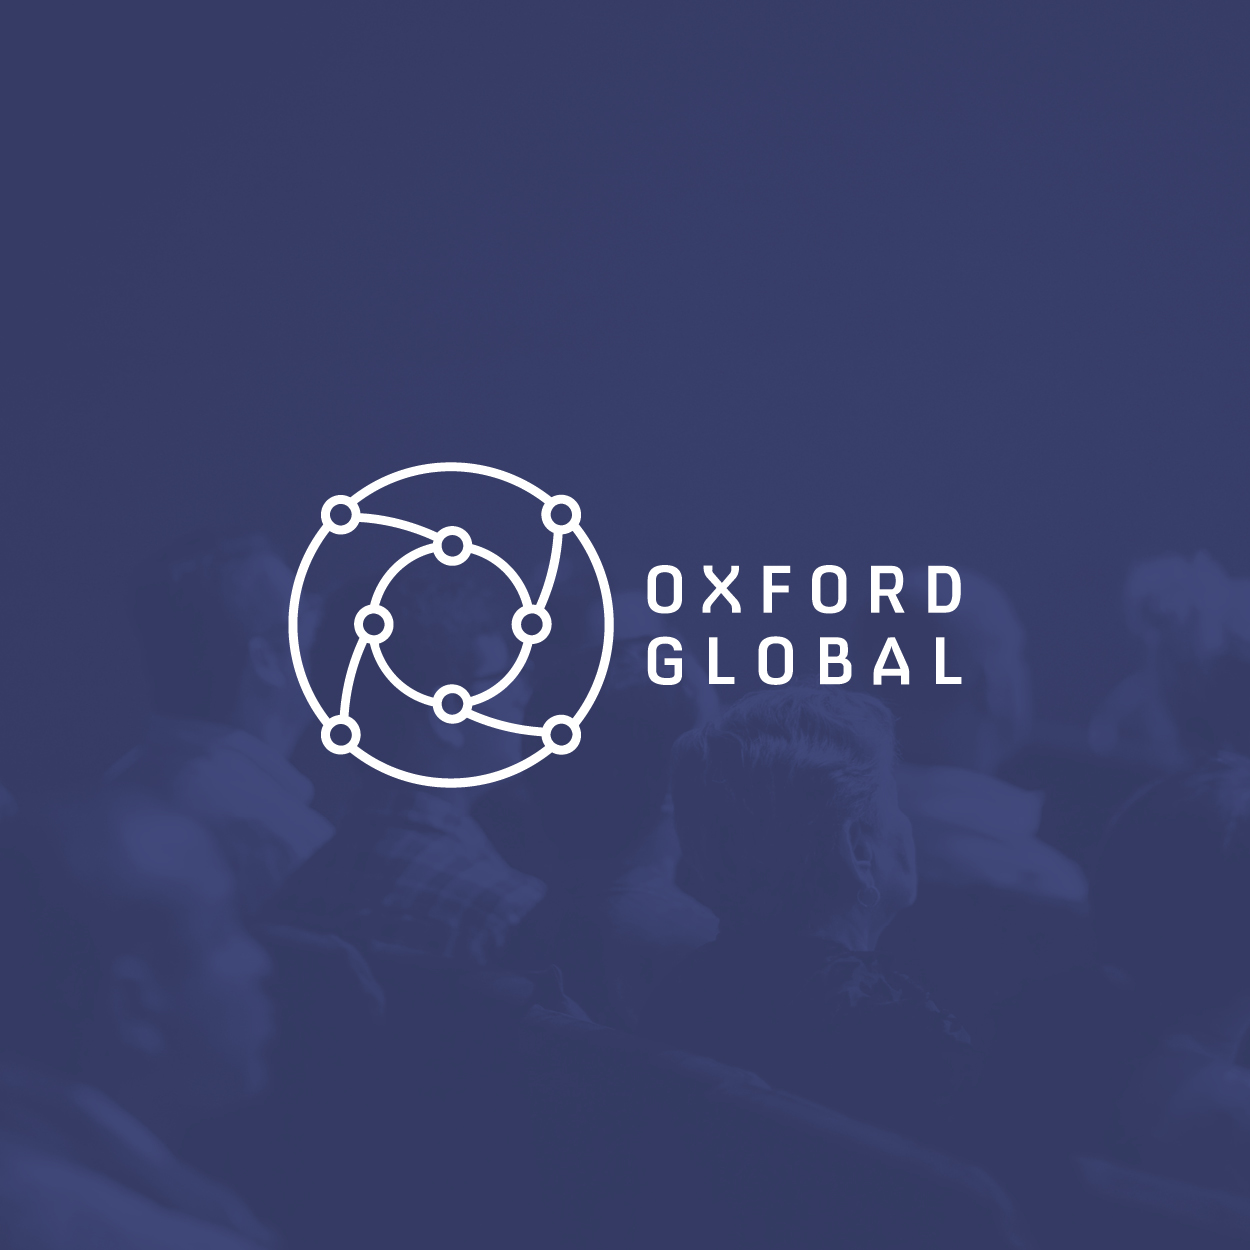 Oxford Global banner